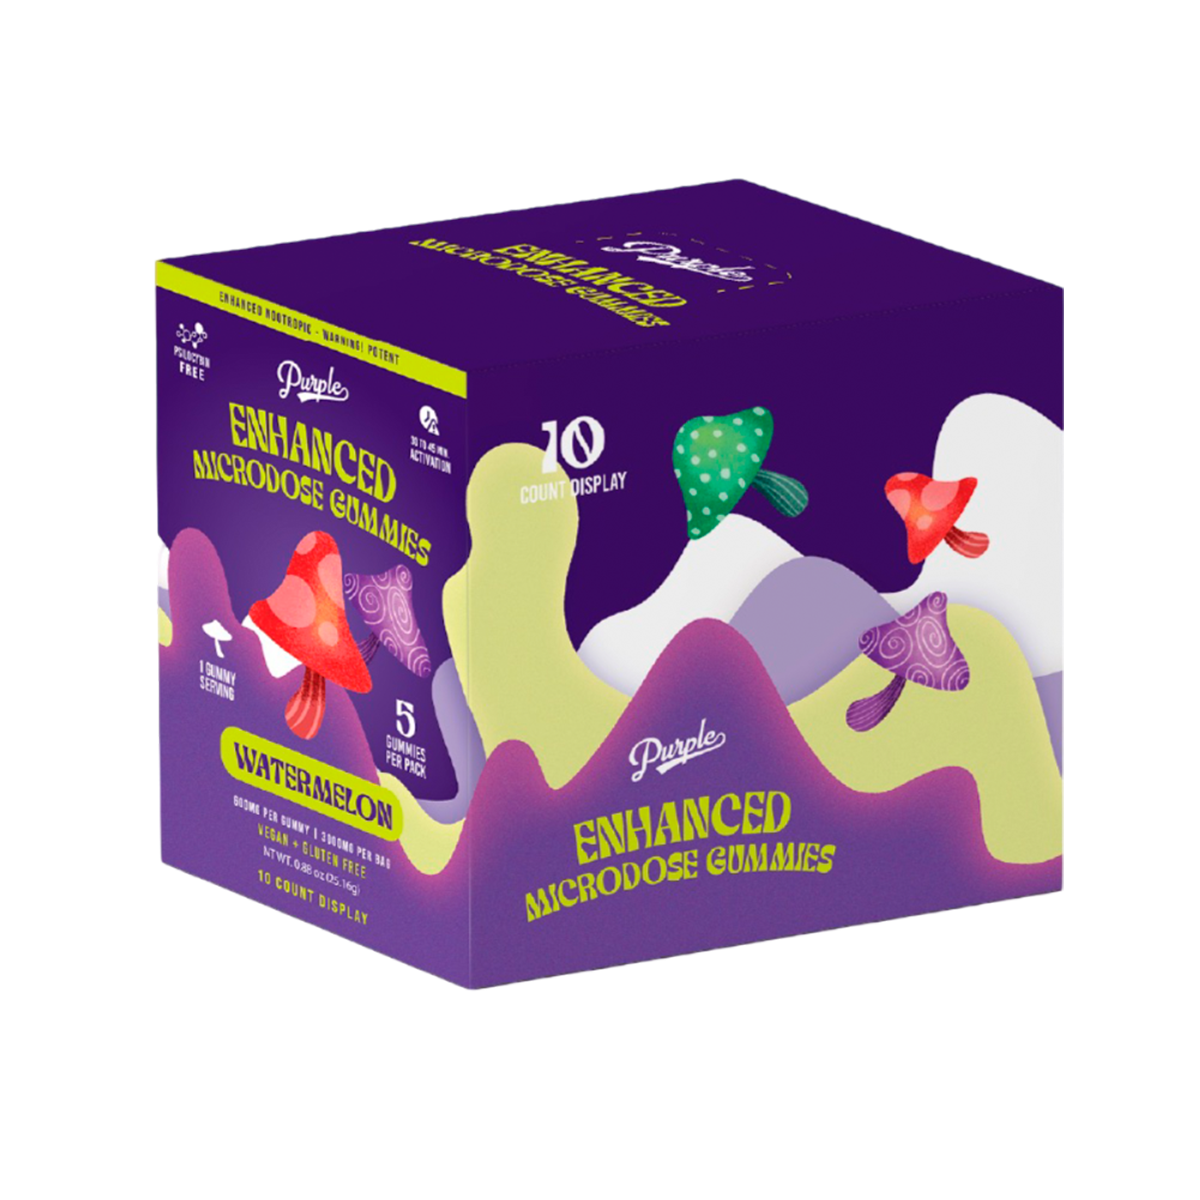 Purple Mushroom Enhanced Microdose Gummies | Watermelon